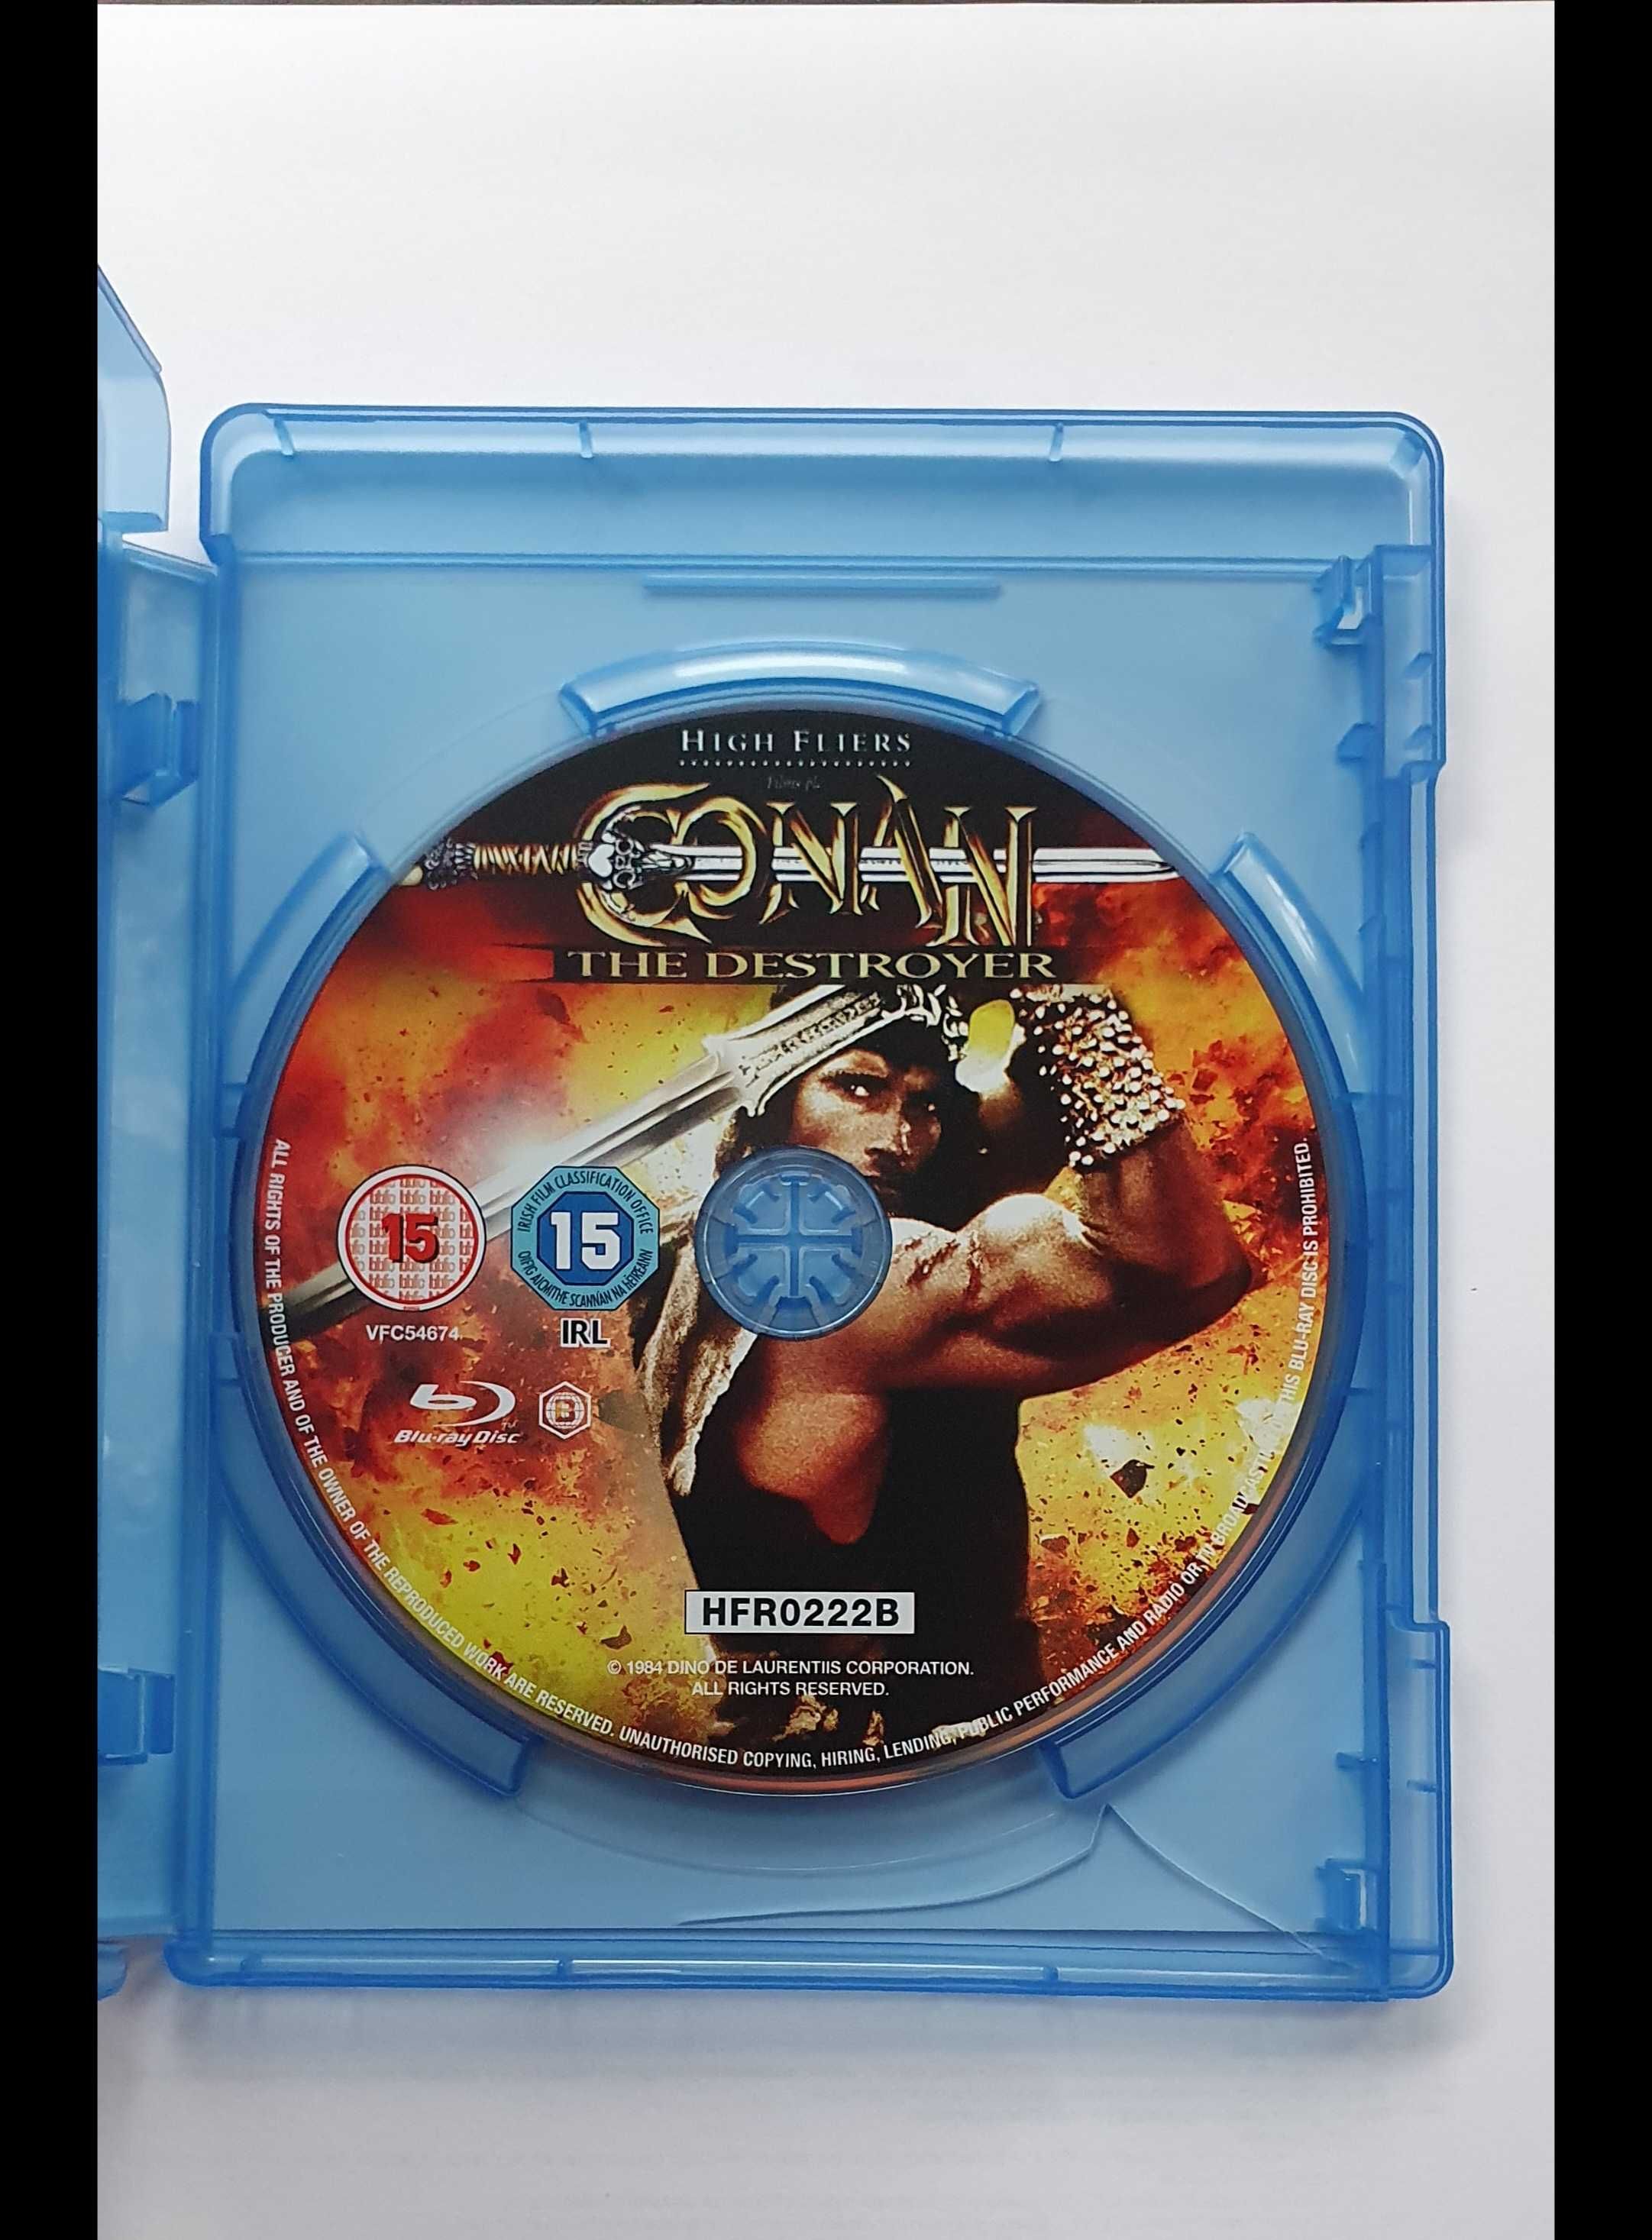 Conan The Destroyer - Blu-Ray